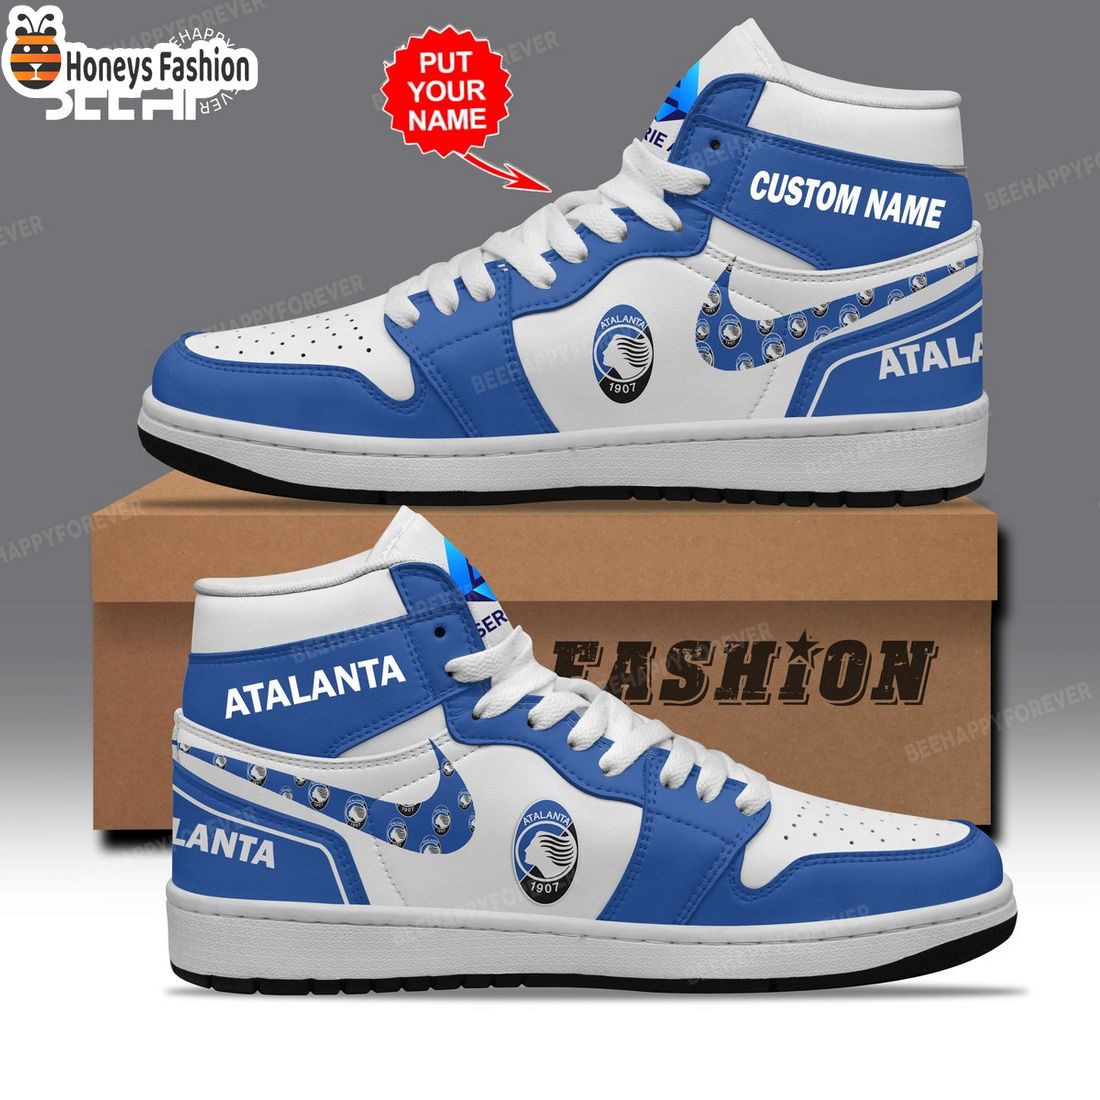 Atalanta Custom Name Nike Air Jordan 1 Shoes